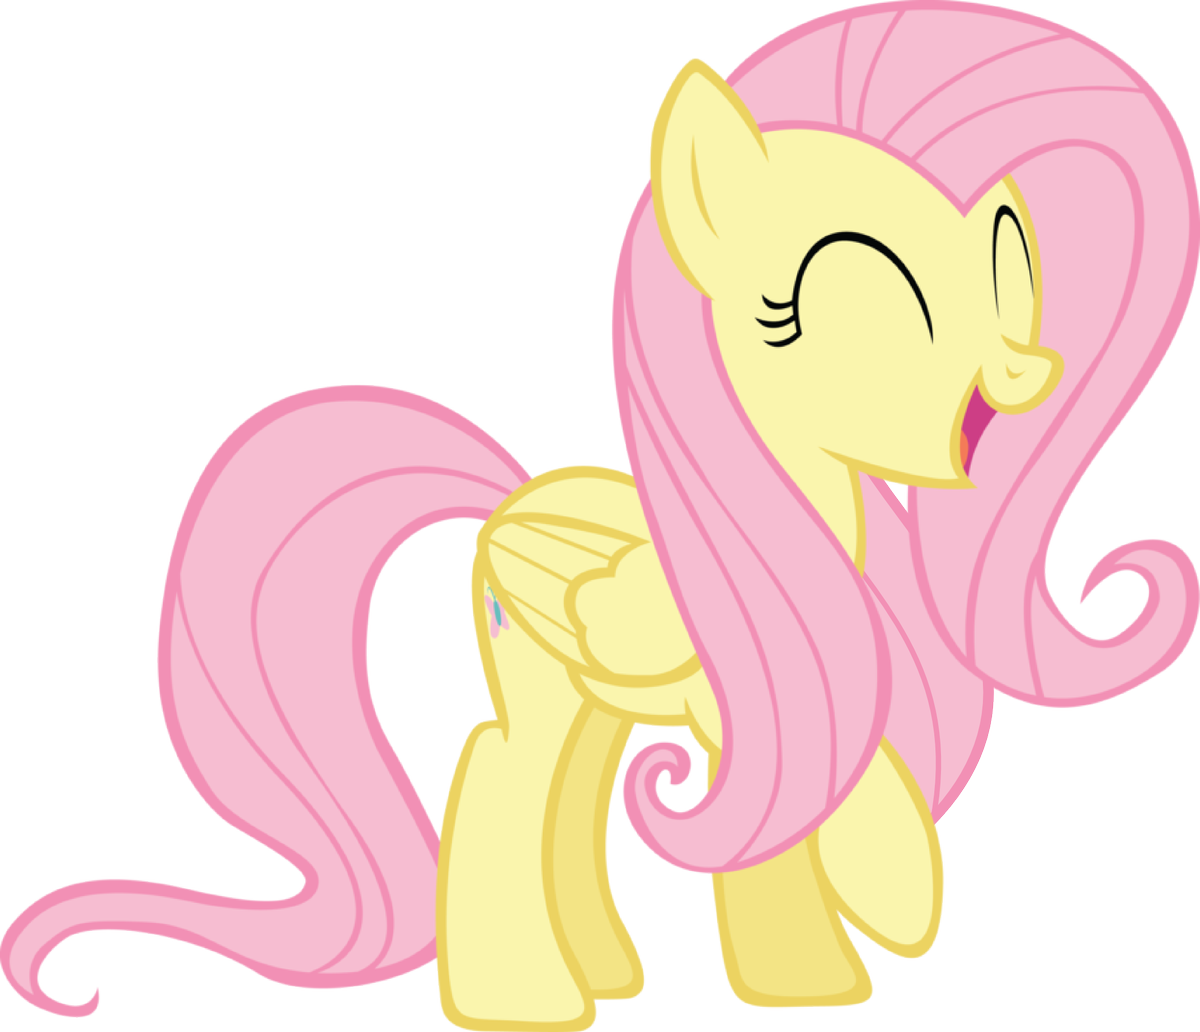 7 Jan - My Little Pony: Friendship Is Magic (1200x1032)